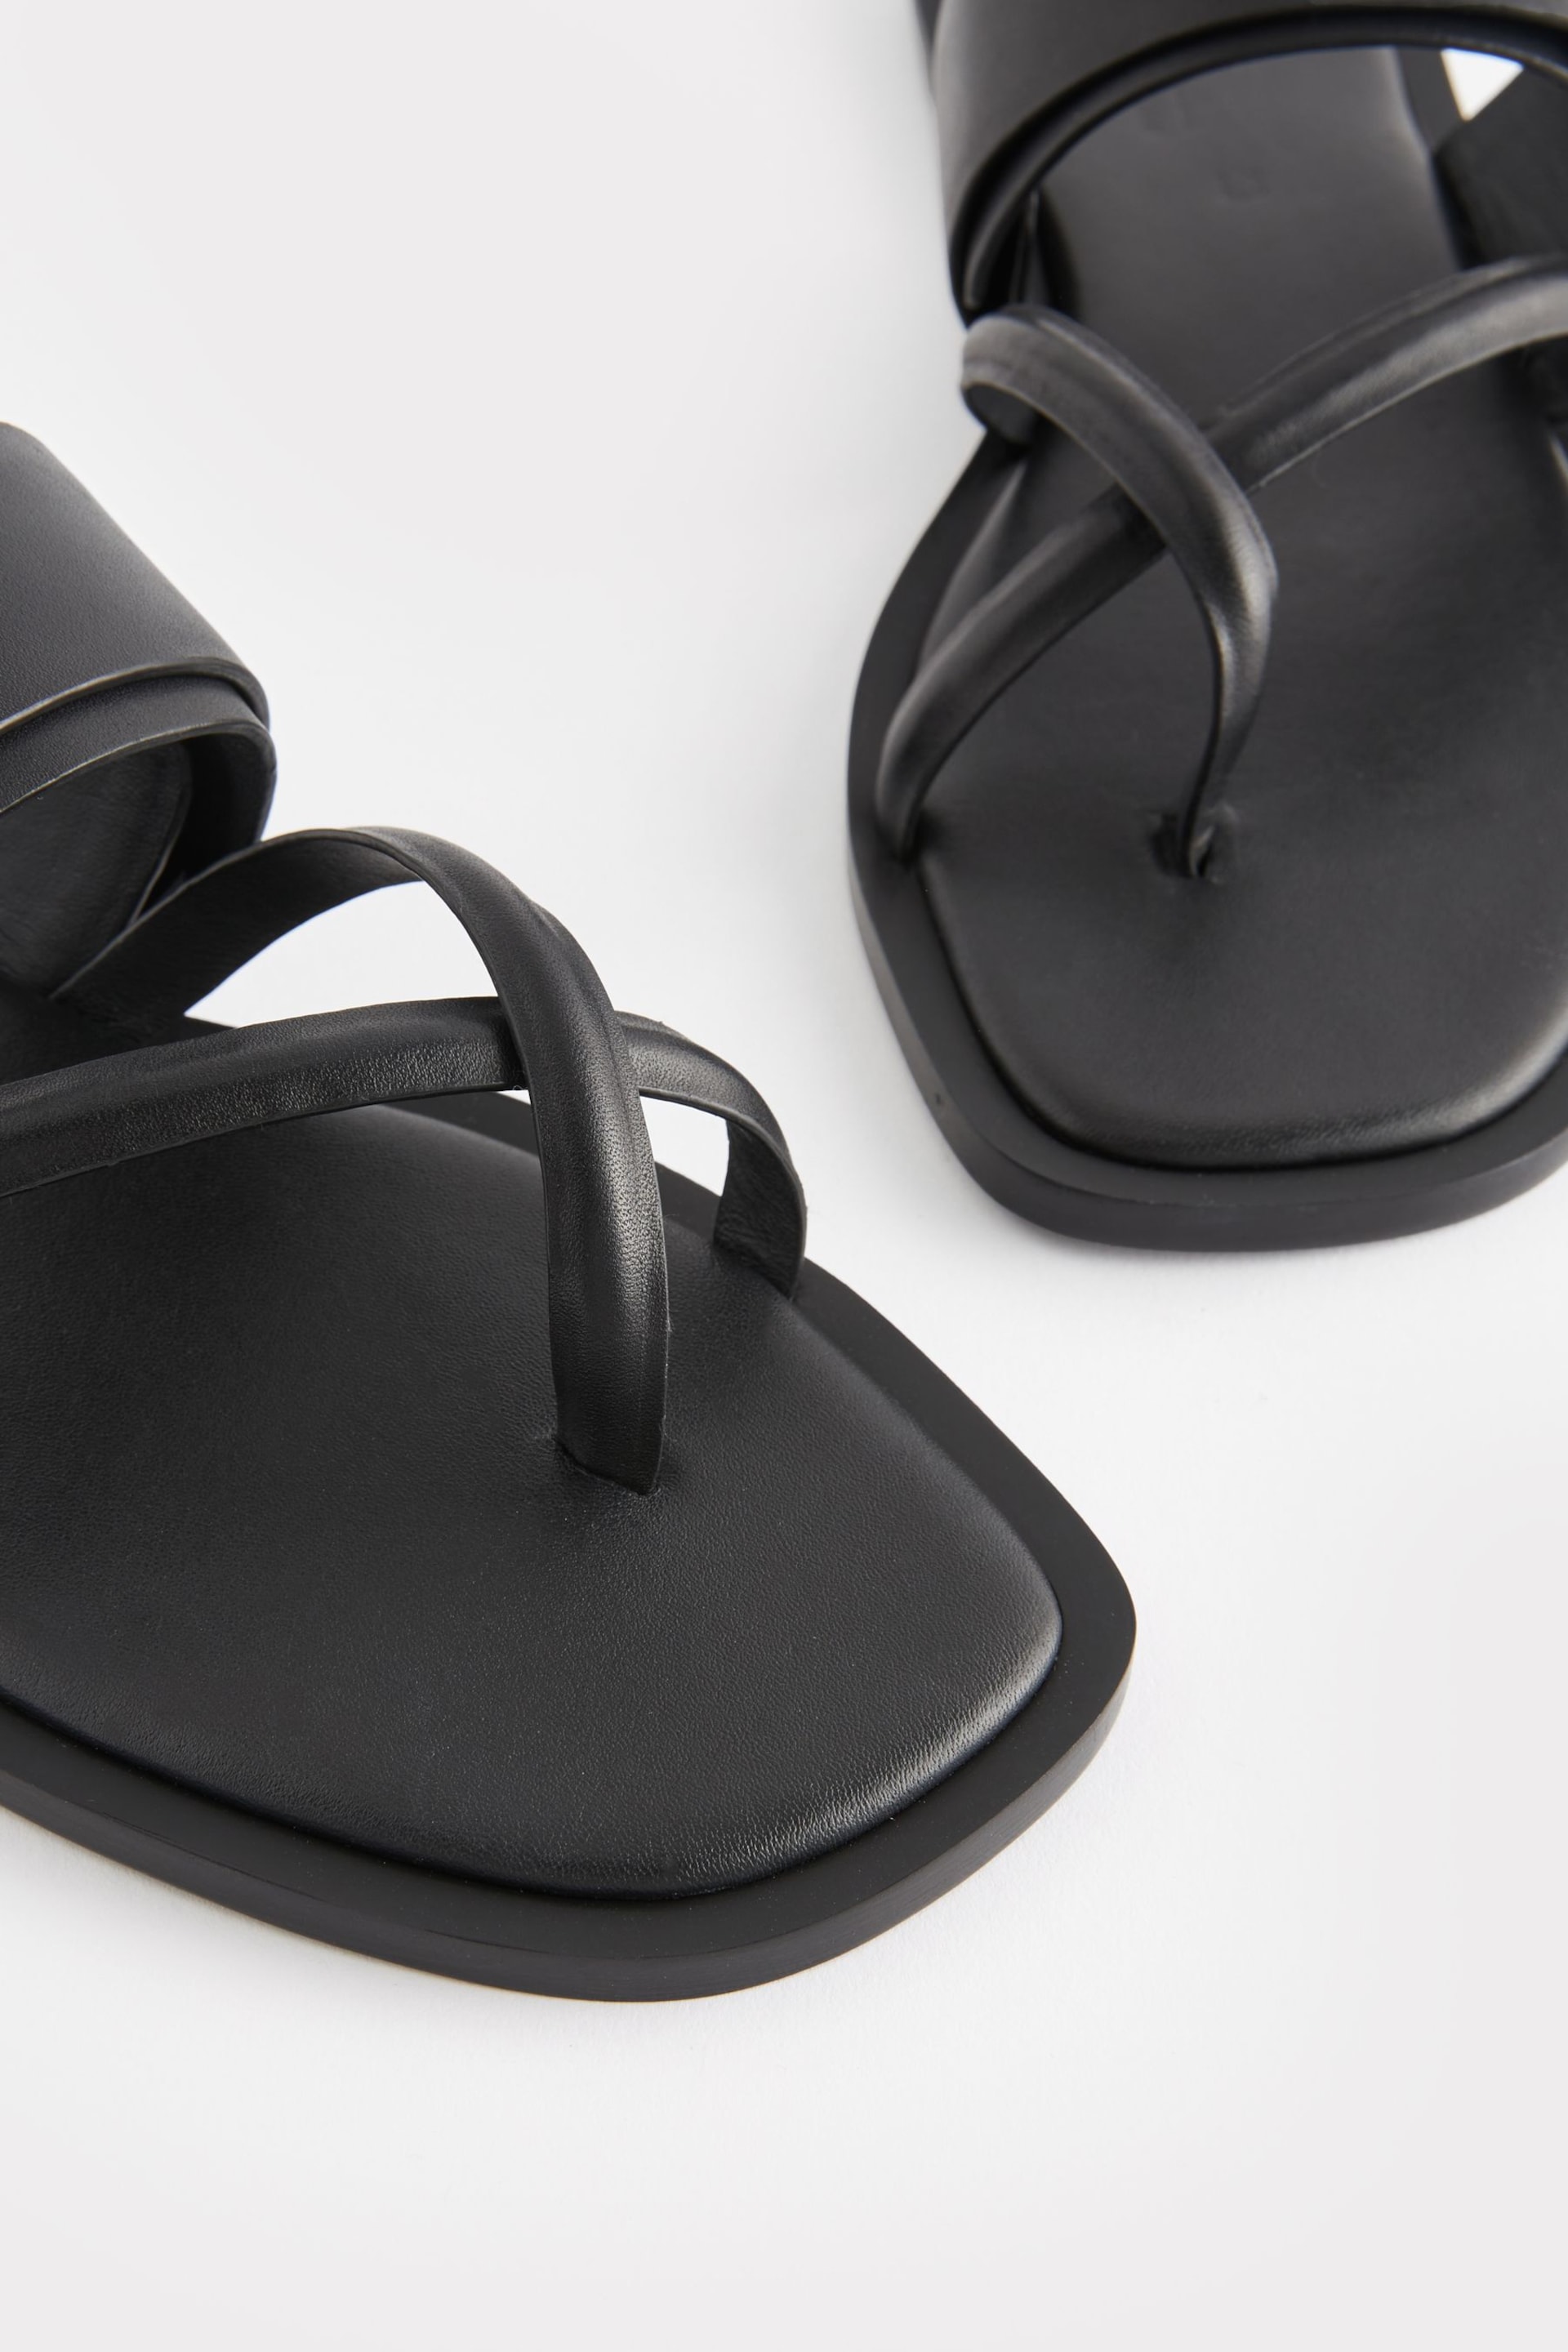 Black Premium Leather Forever Comfort® Cross Toe Post Sandals - Image 7 of 9